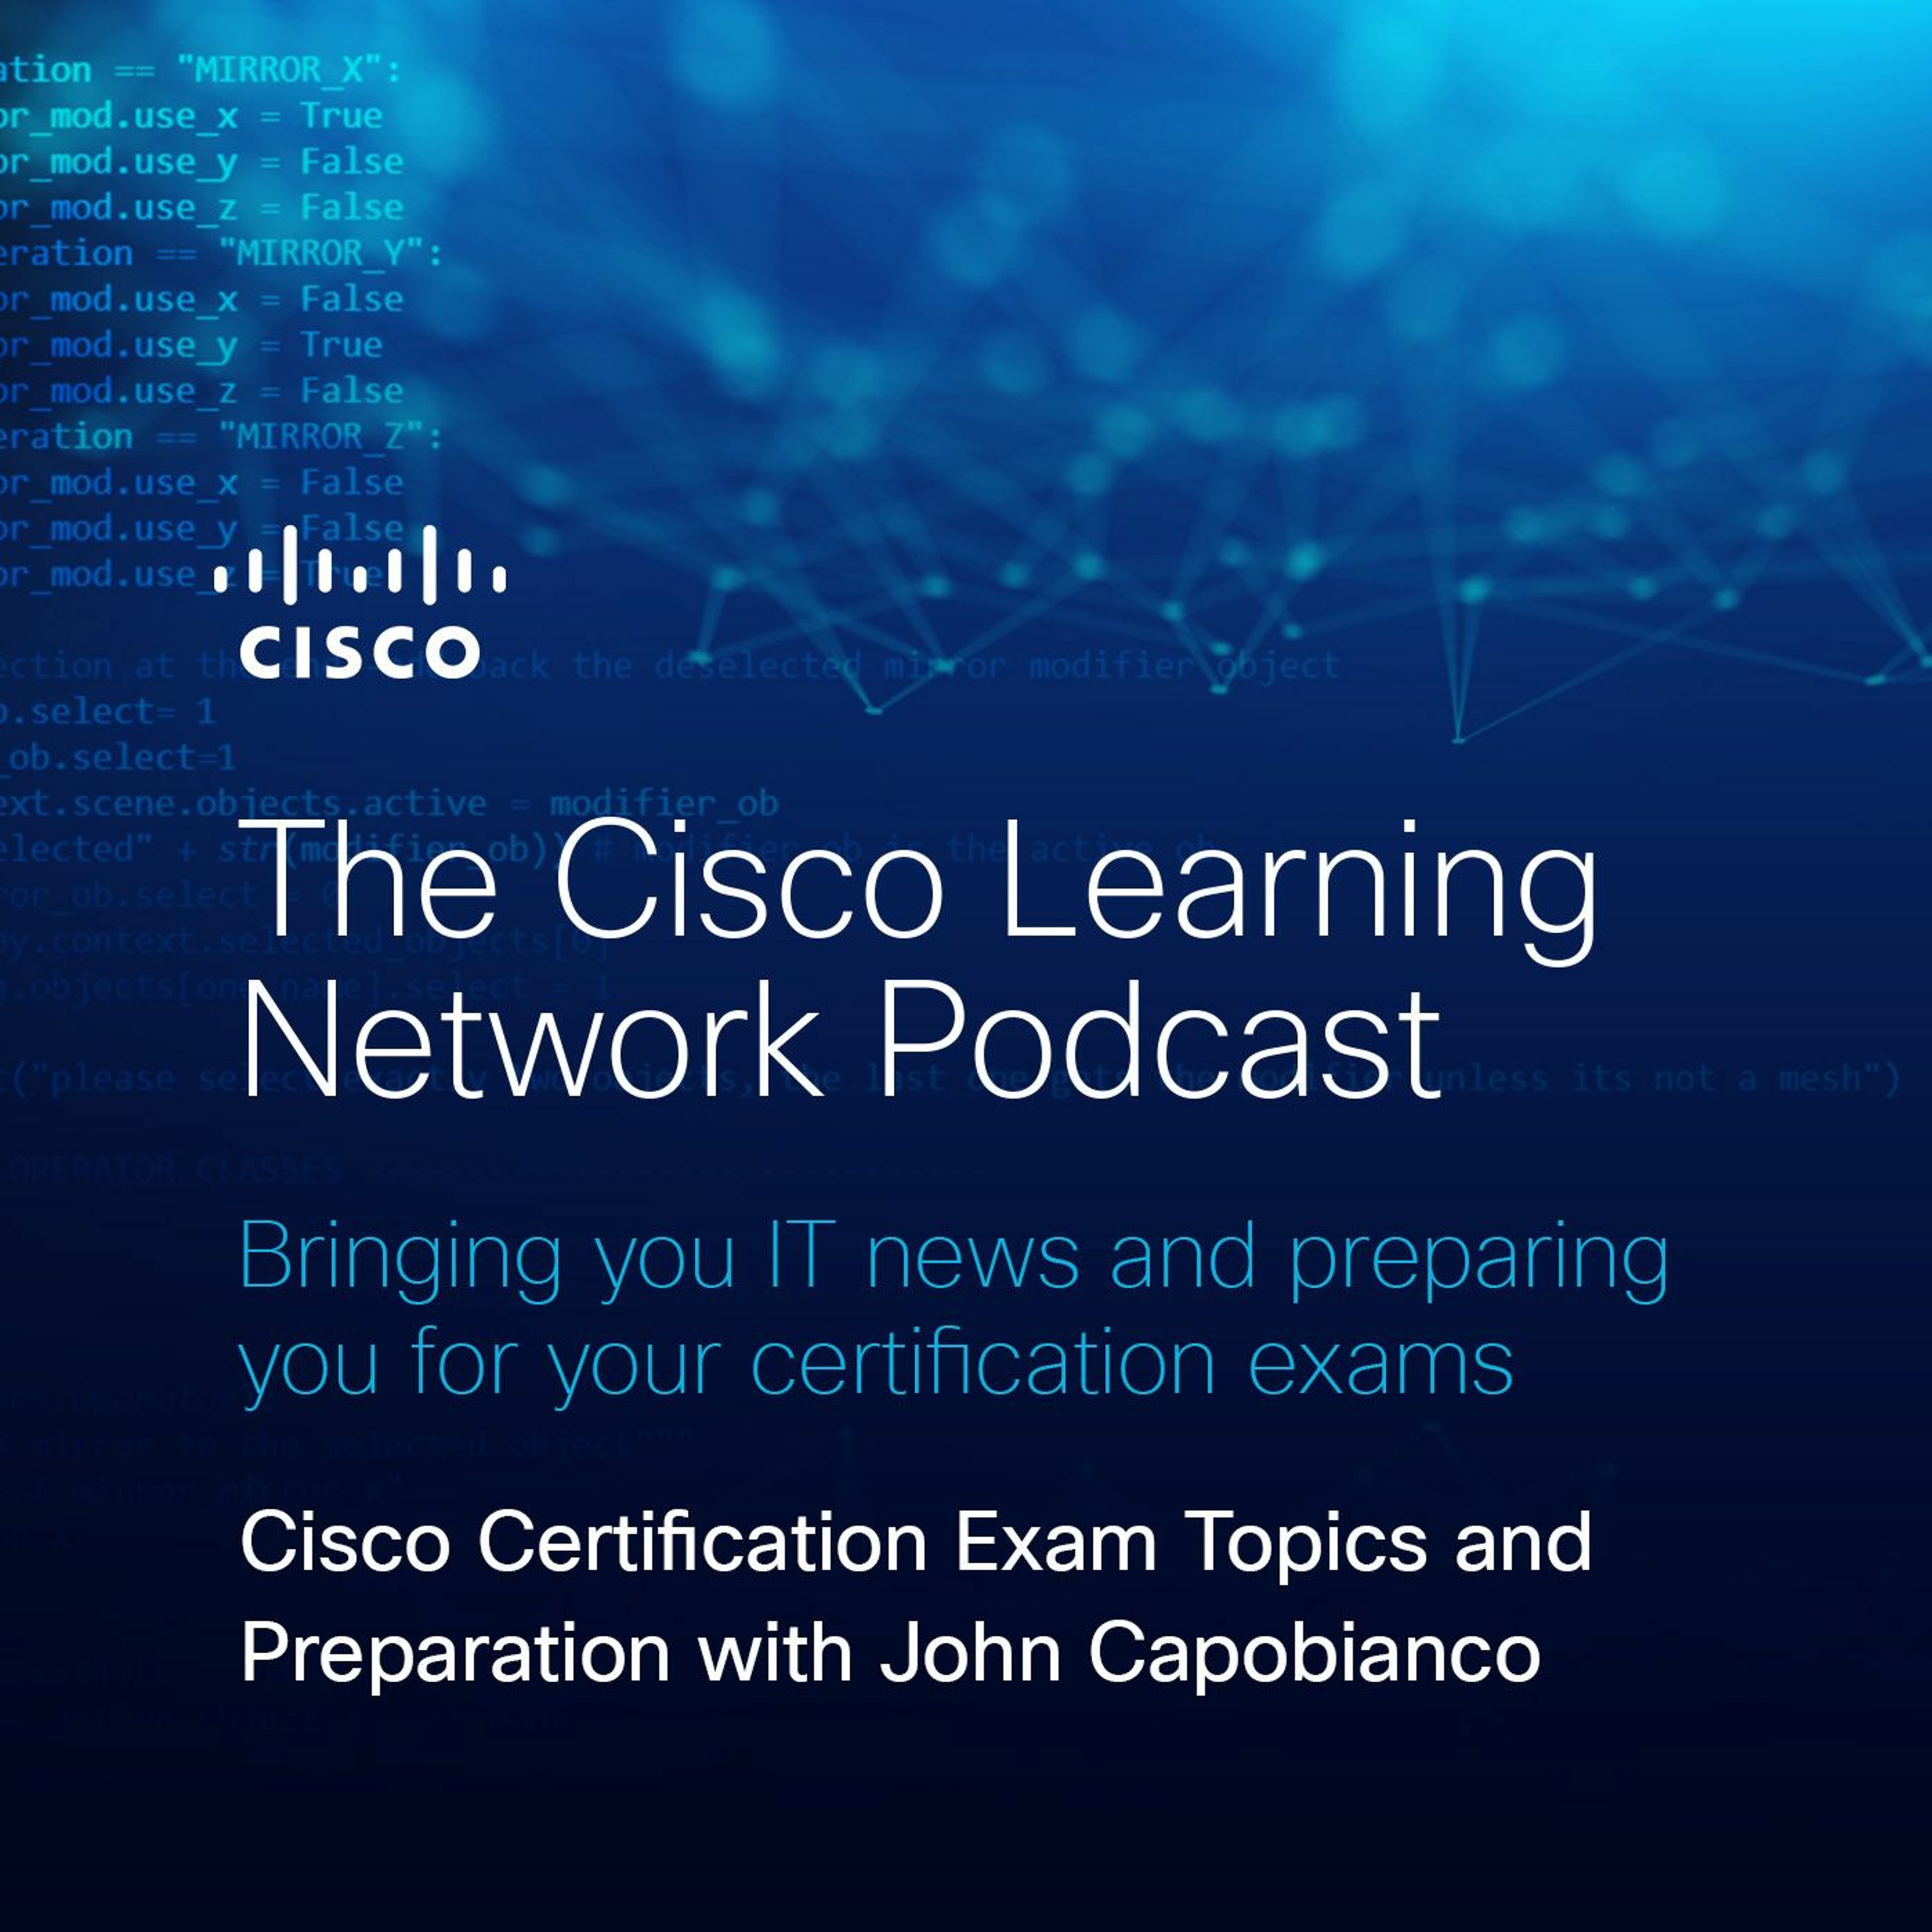 Cisco Certification Exam Topics and Preparation with John Capobianco